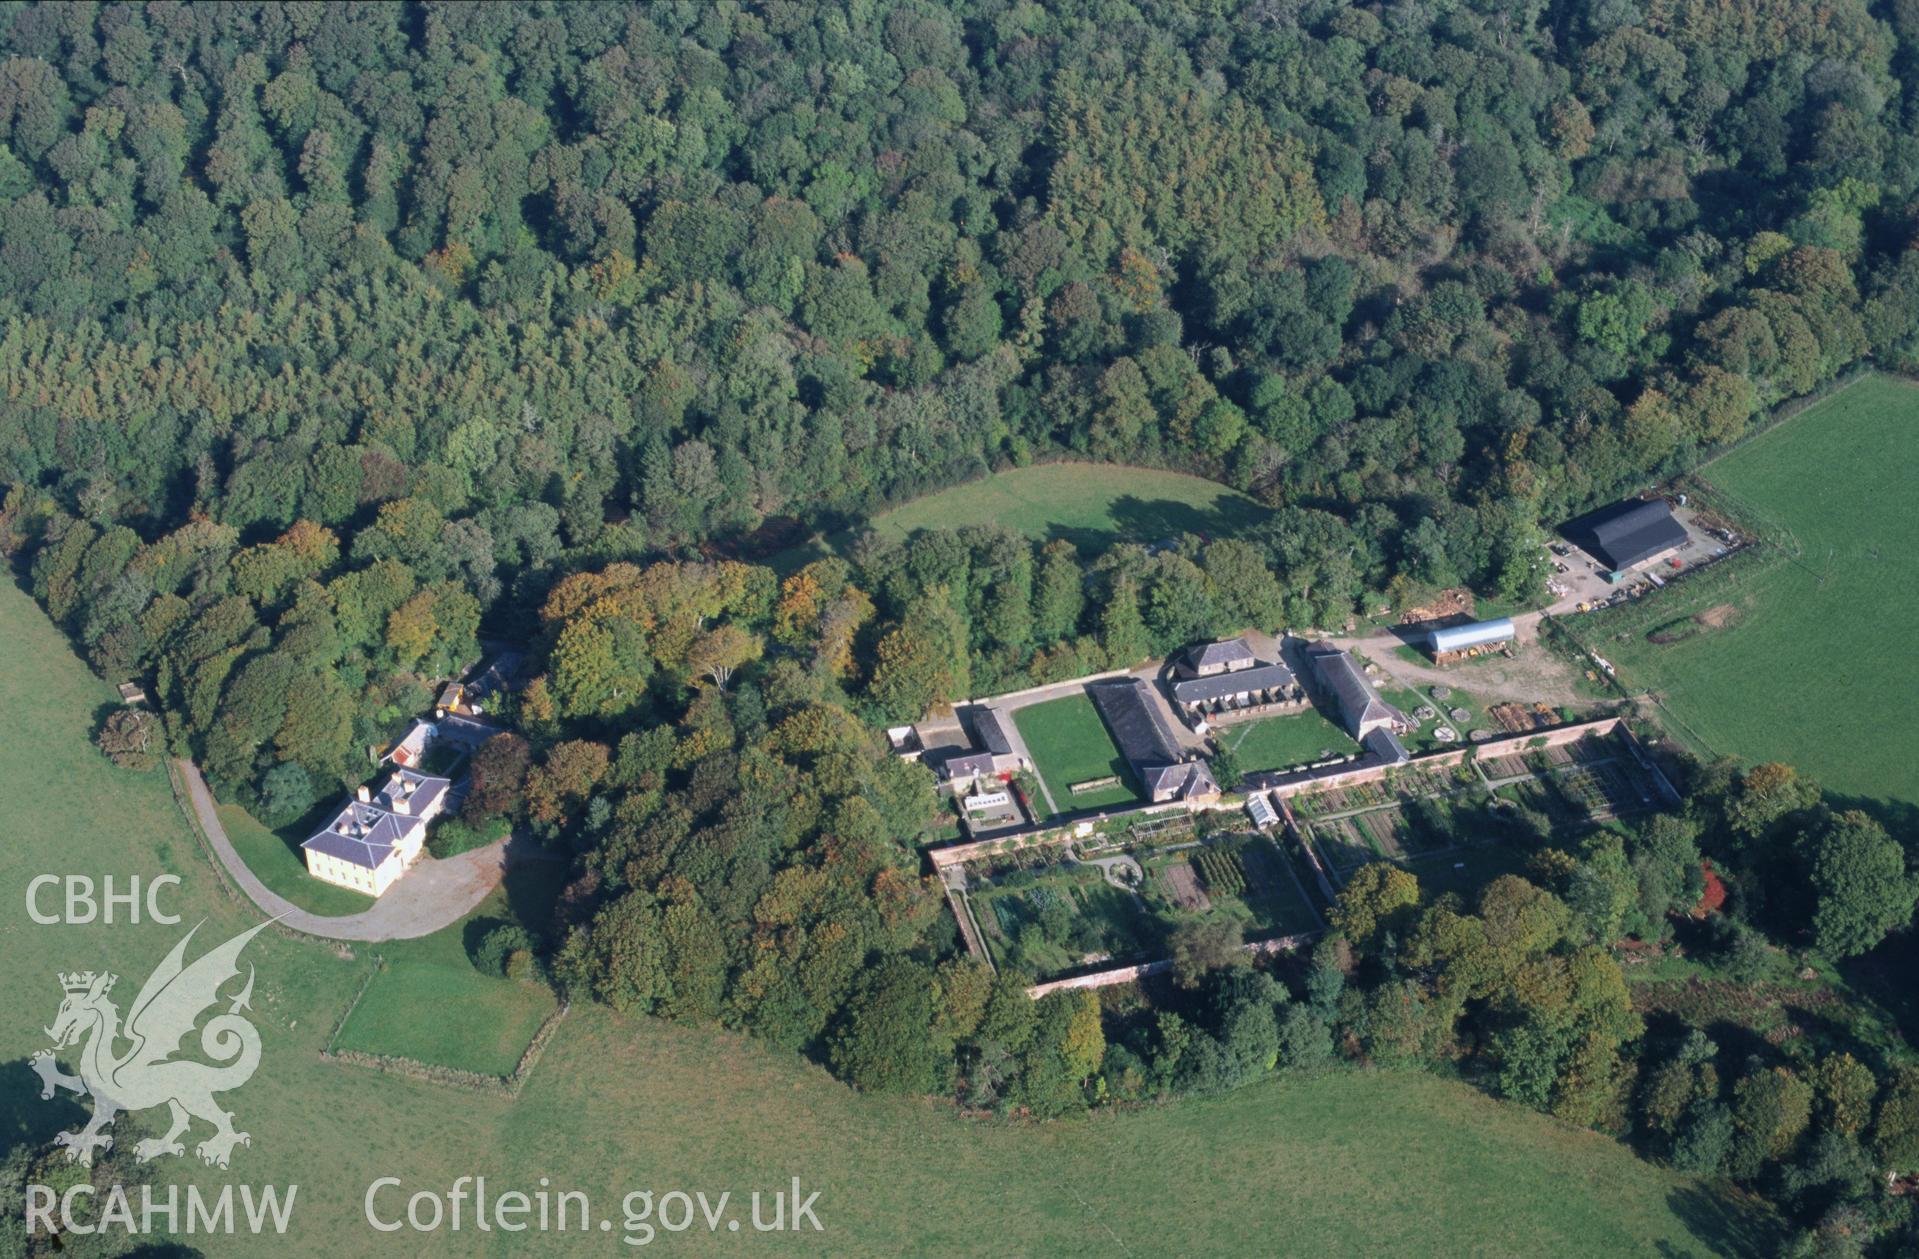 Slide of RCAHMW colour oblique aerial photograph of Llanaeron [llannerchaeron House], taken by T.G. Driver, 19/10/1999.